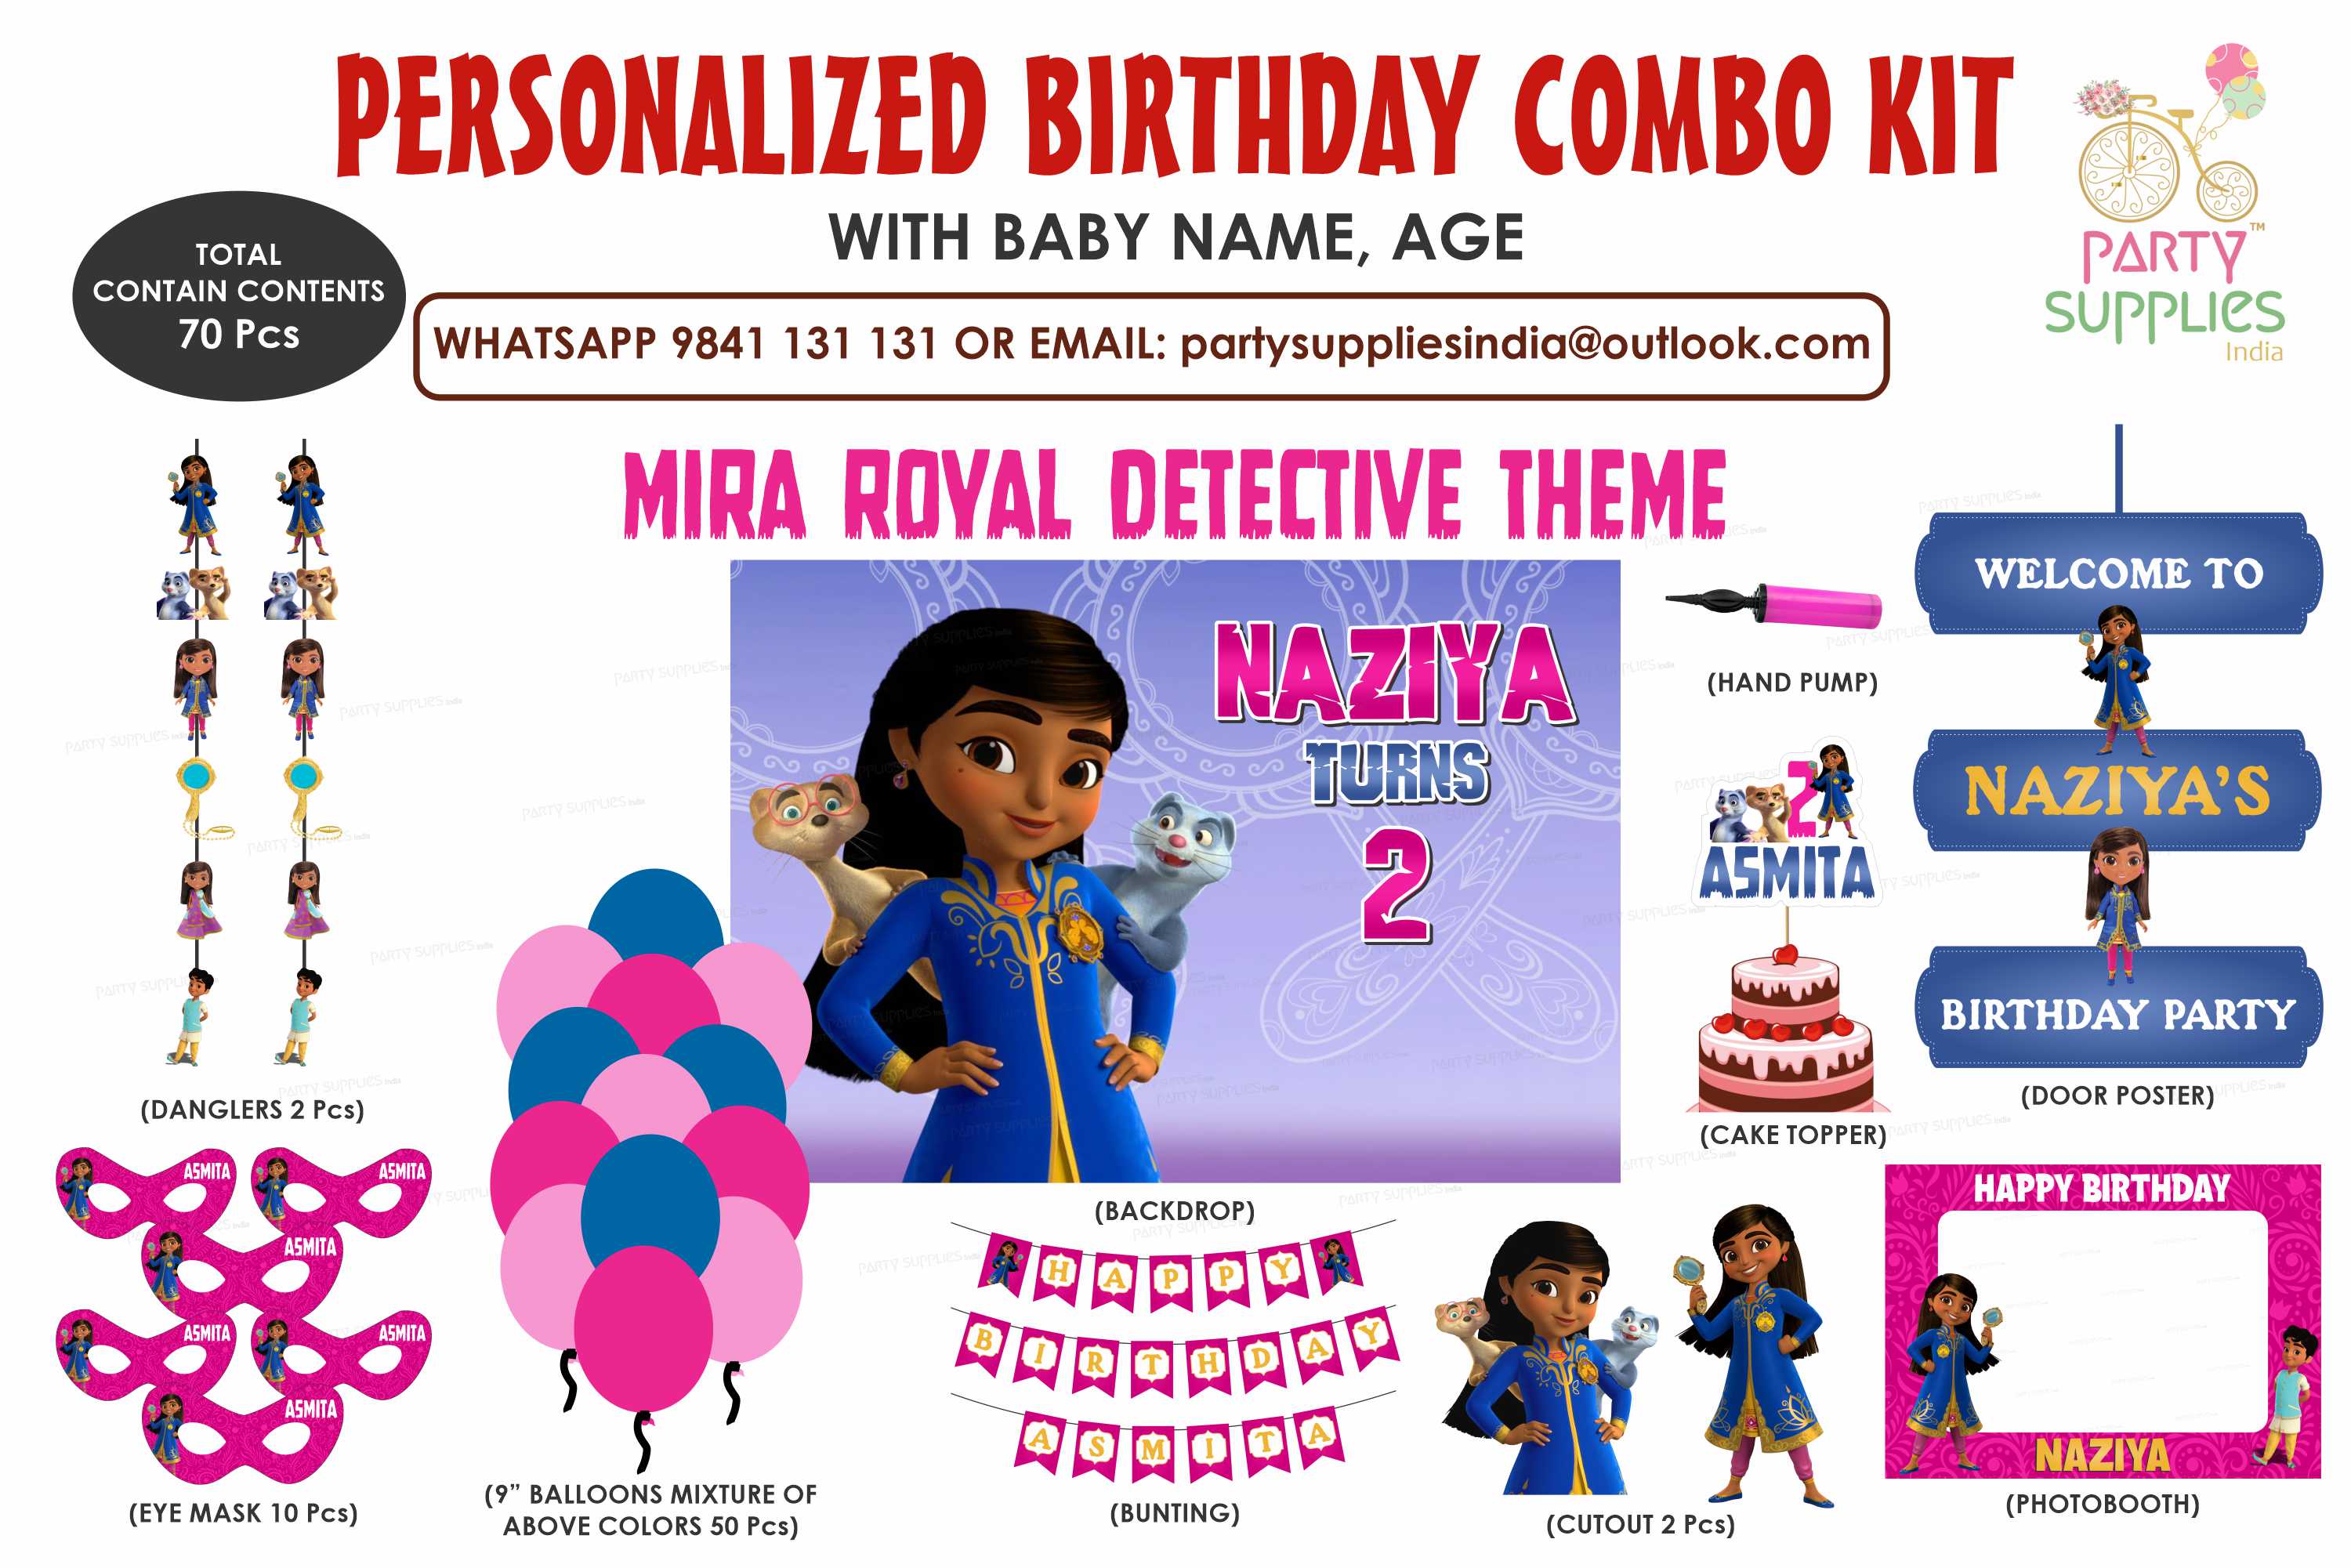 PSI Mira Royal Detective Exclusive Kit